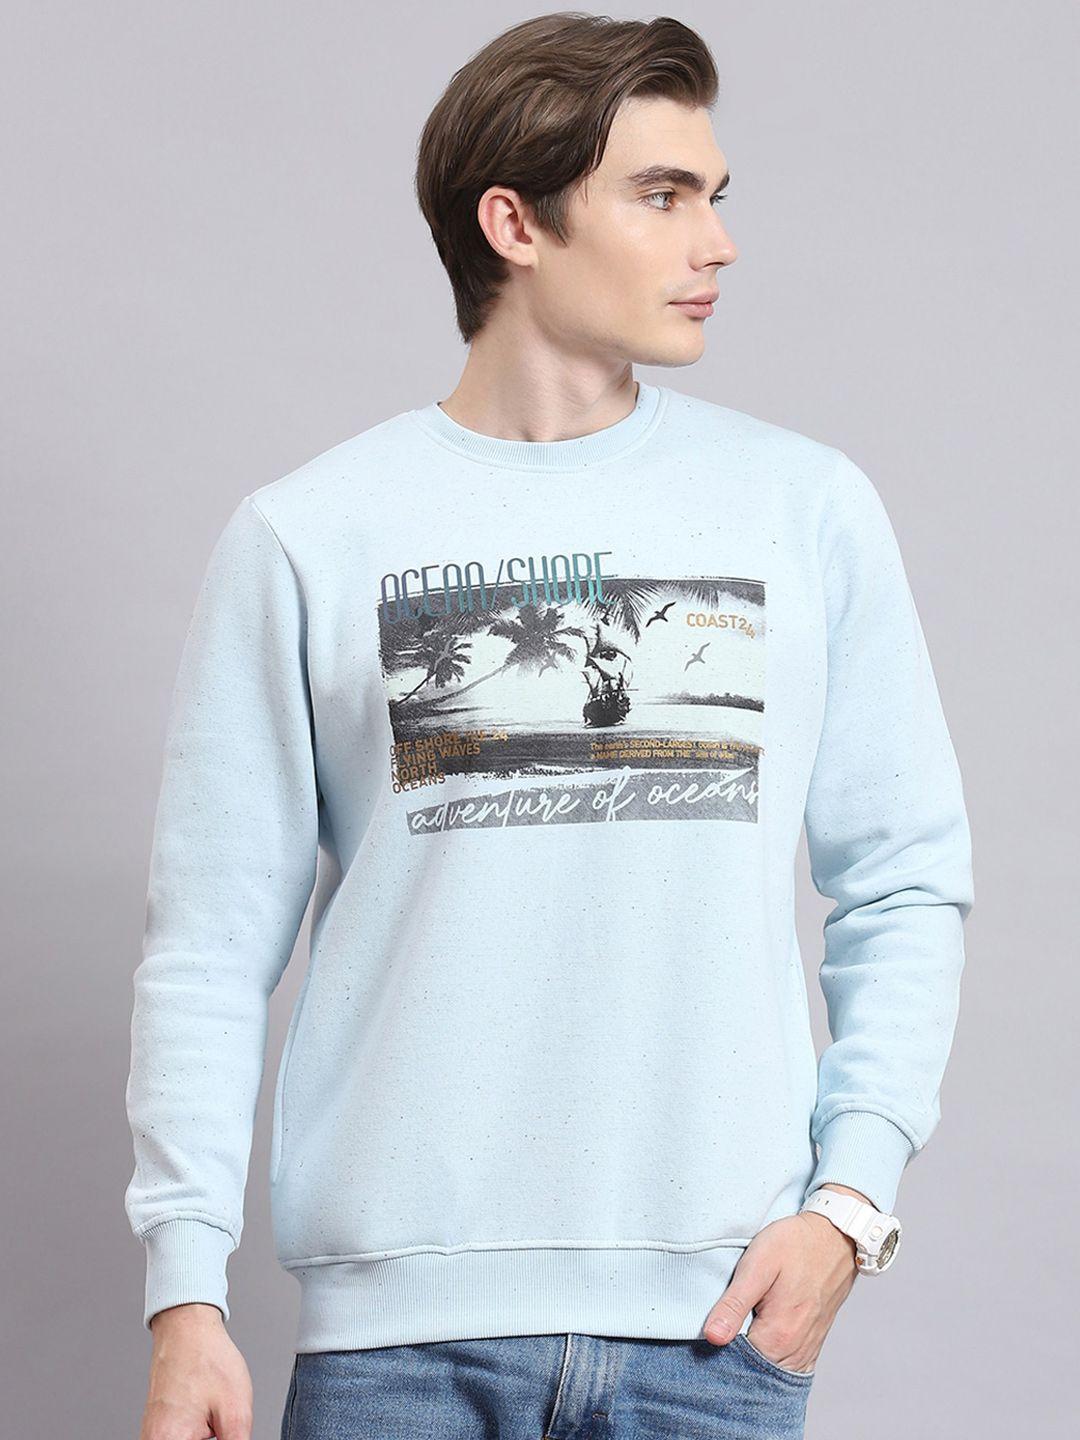 monte-carlo-graphic-printed-round-neck-cotton-pullover-sweatshirt